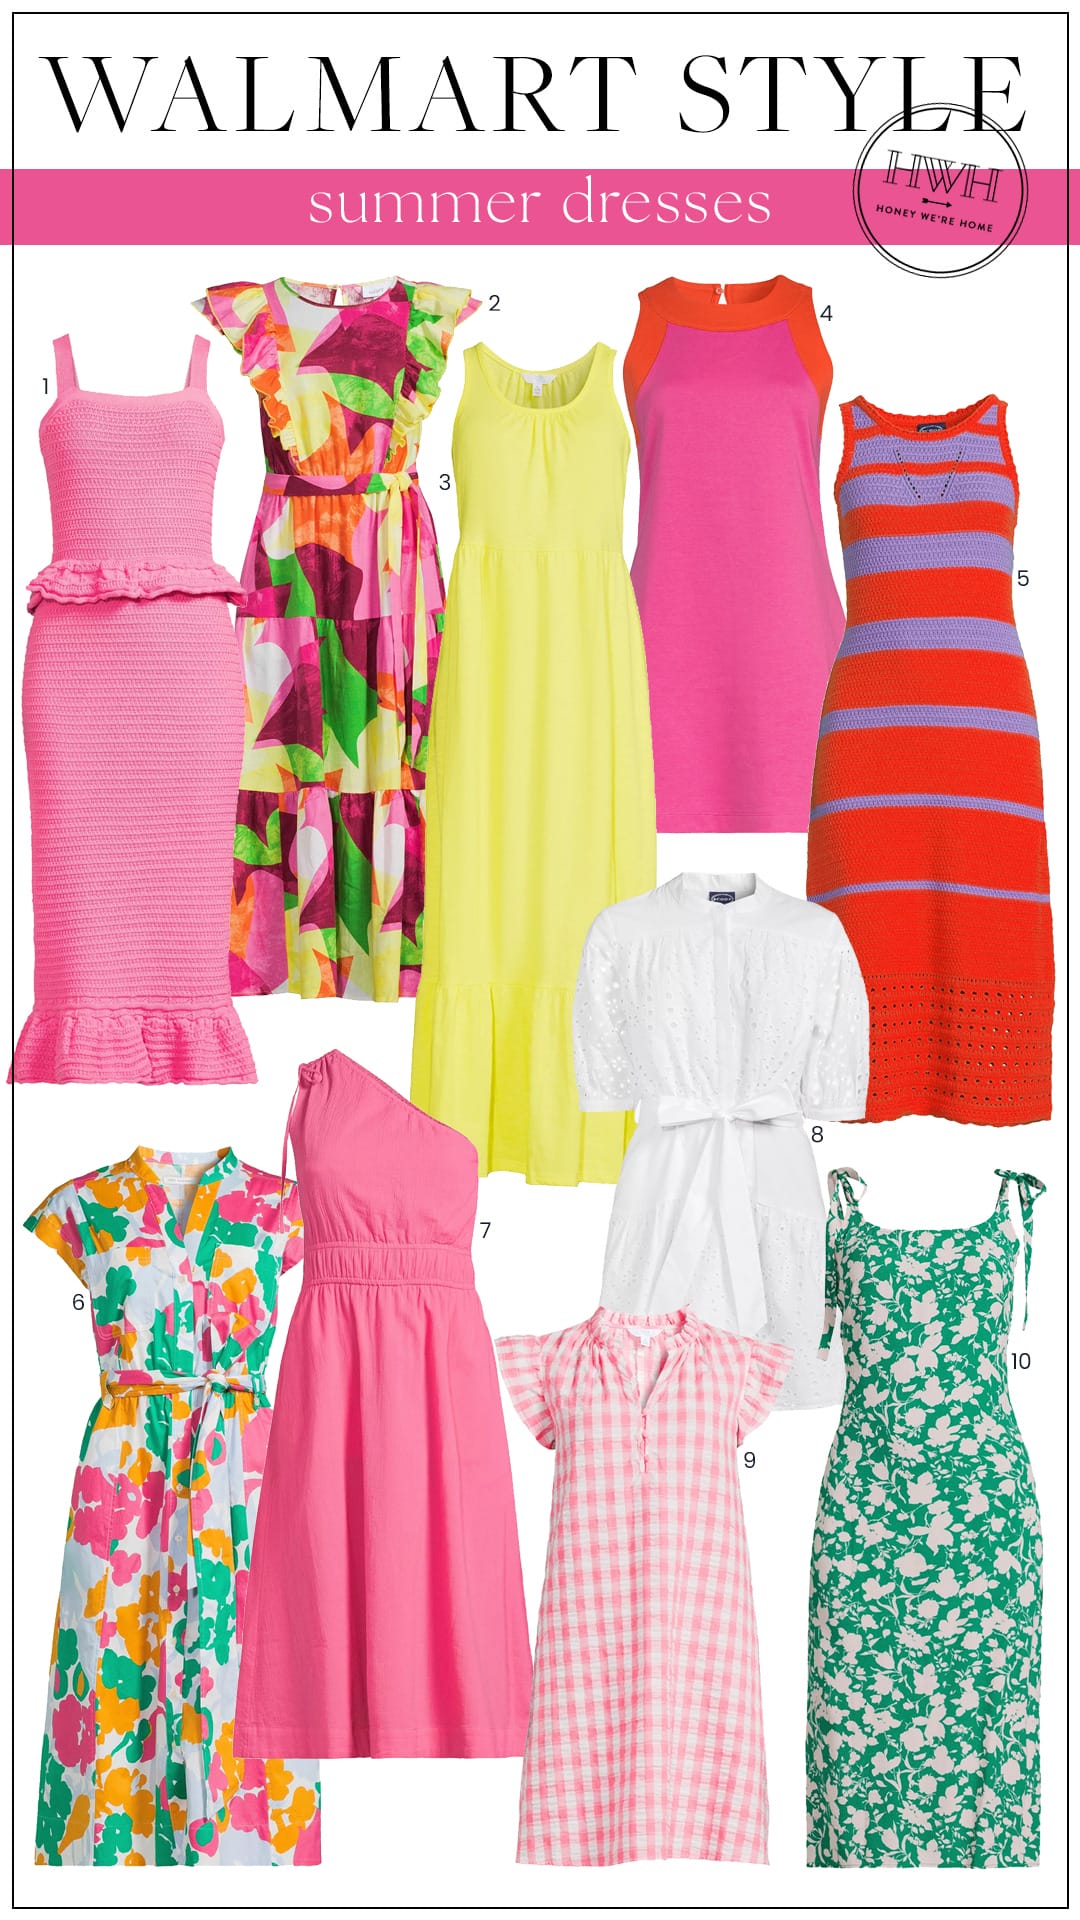 Walmart Style Summer Dresses 